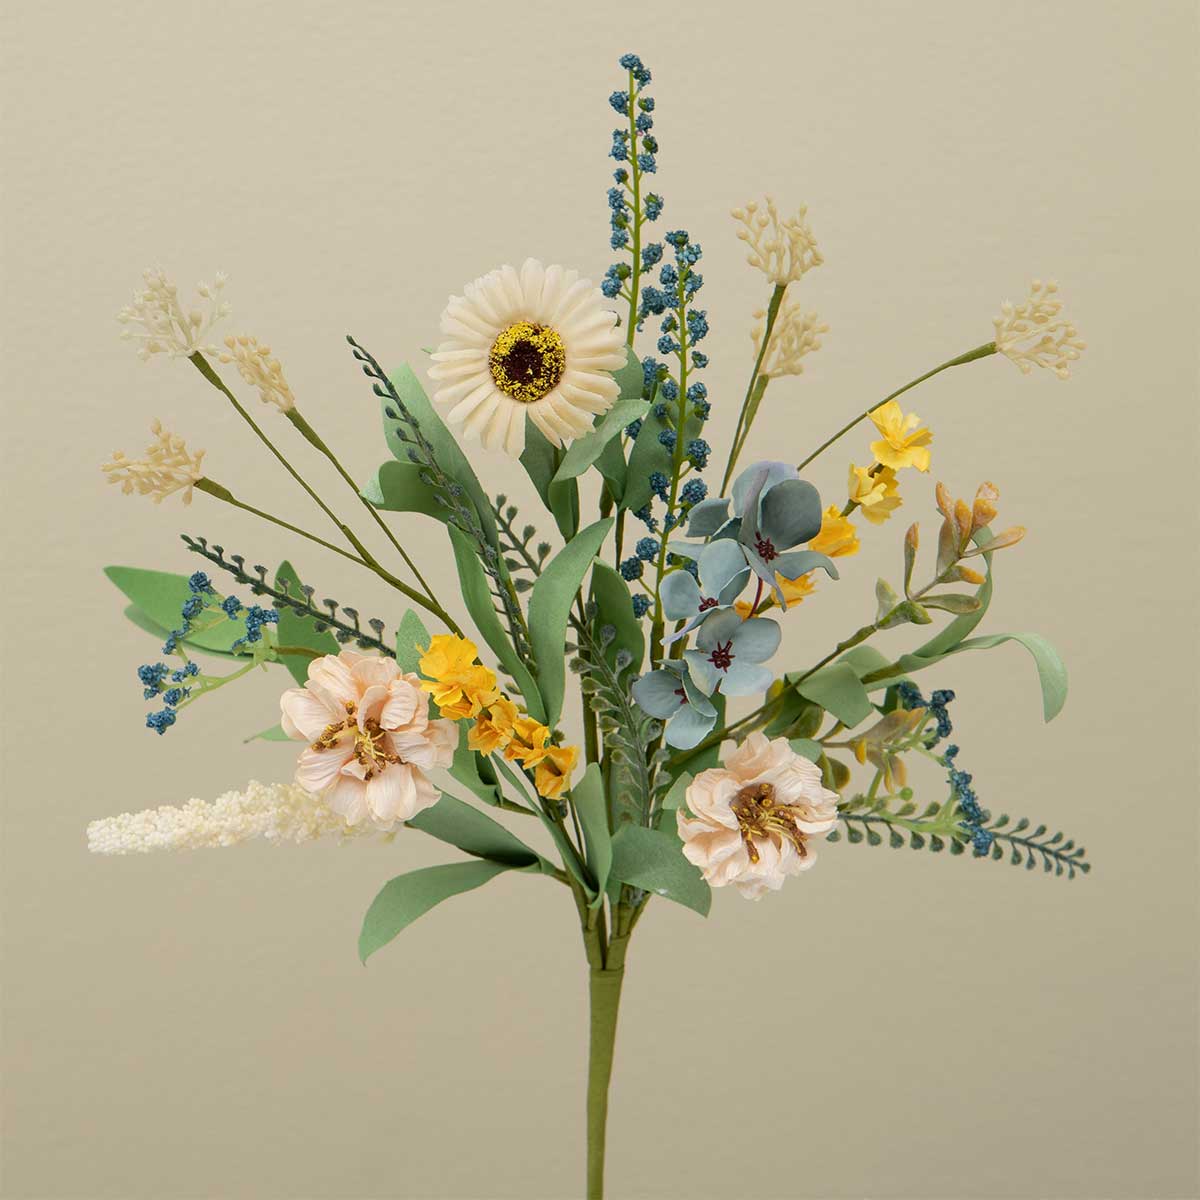 !Gatherings Floral Bush/Pik 10"x15" Mixed Daisy/Cosmos/Hydrangea